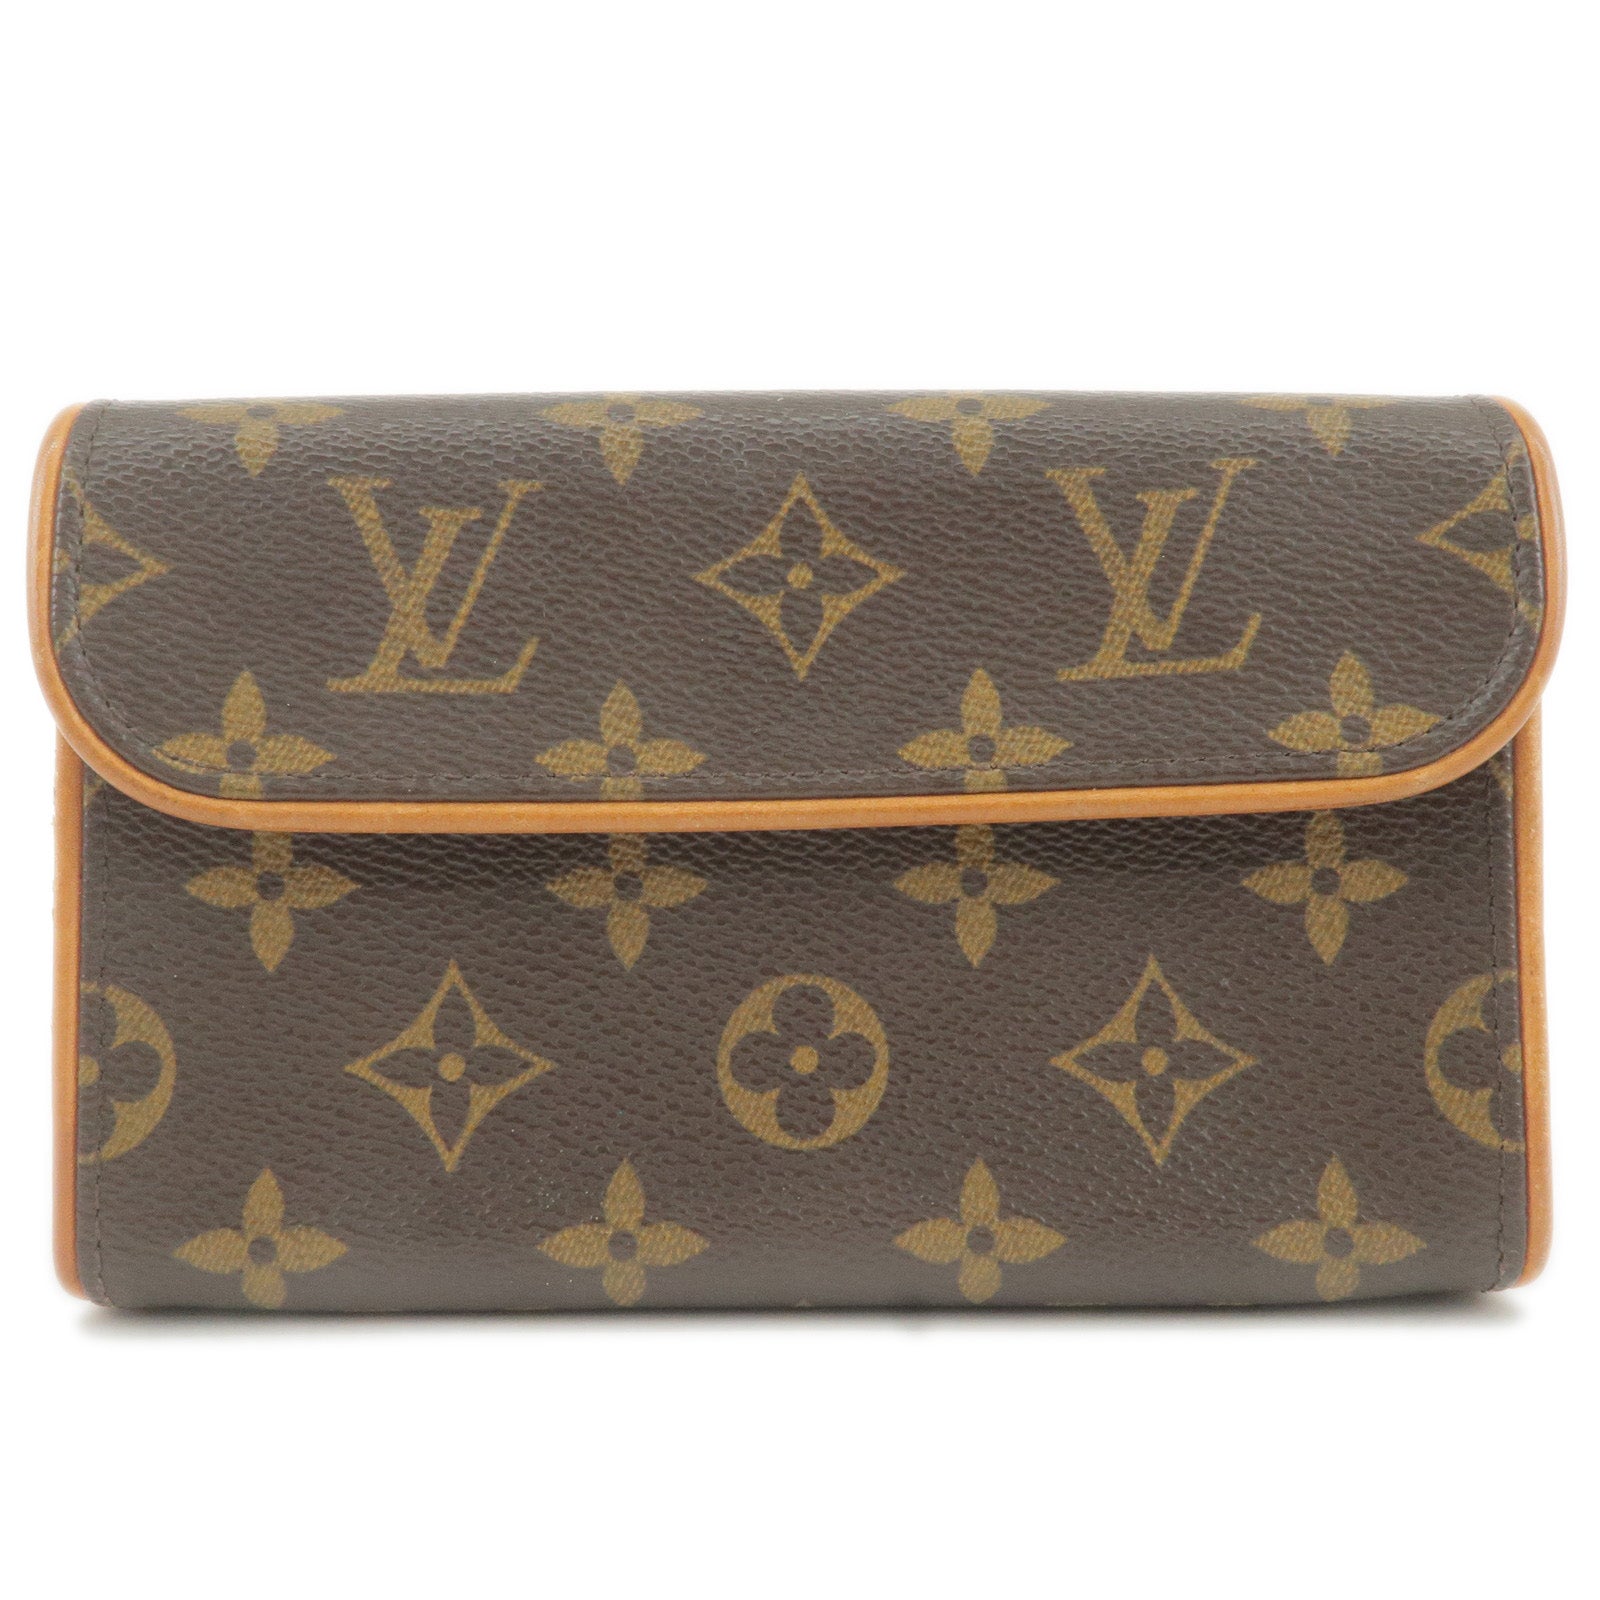 Monogram 'Florentine' Belt Bag, Authentic & Vintage